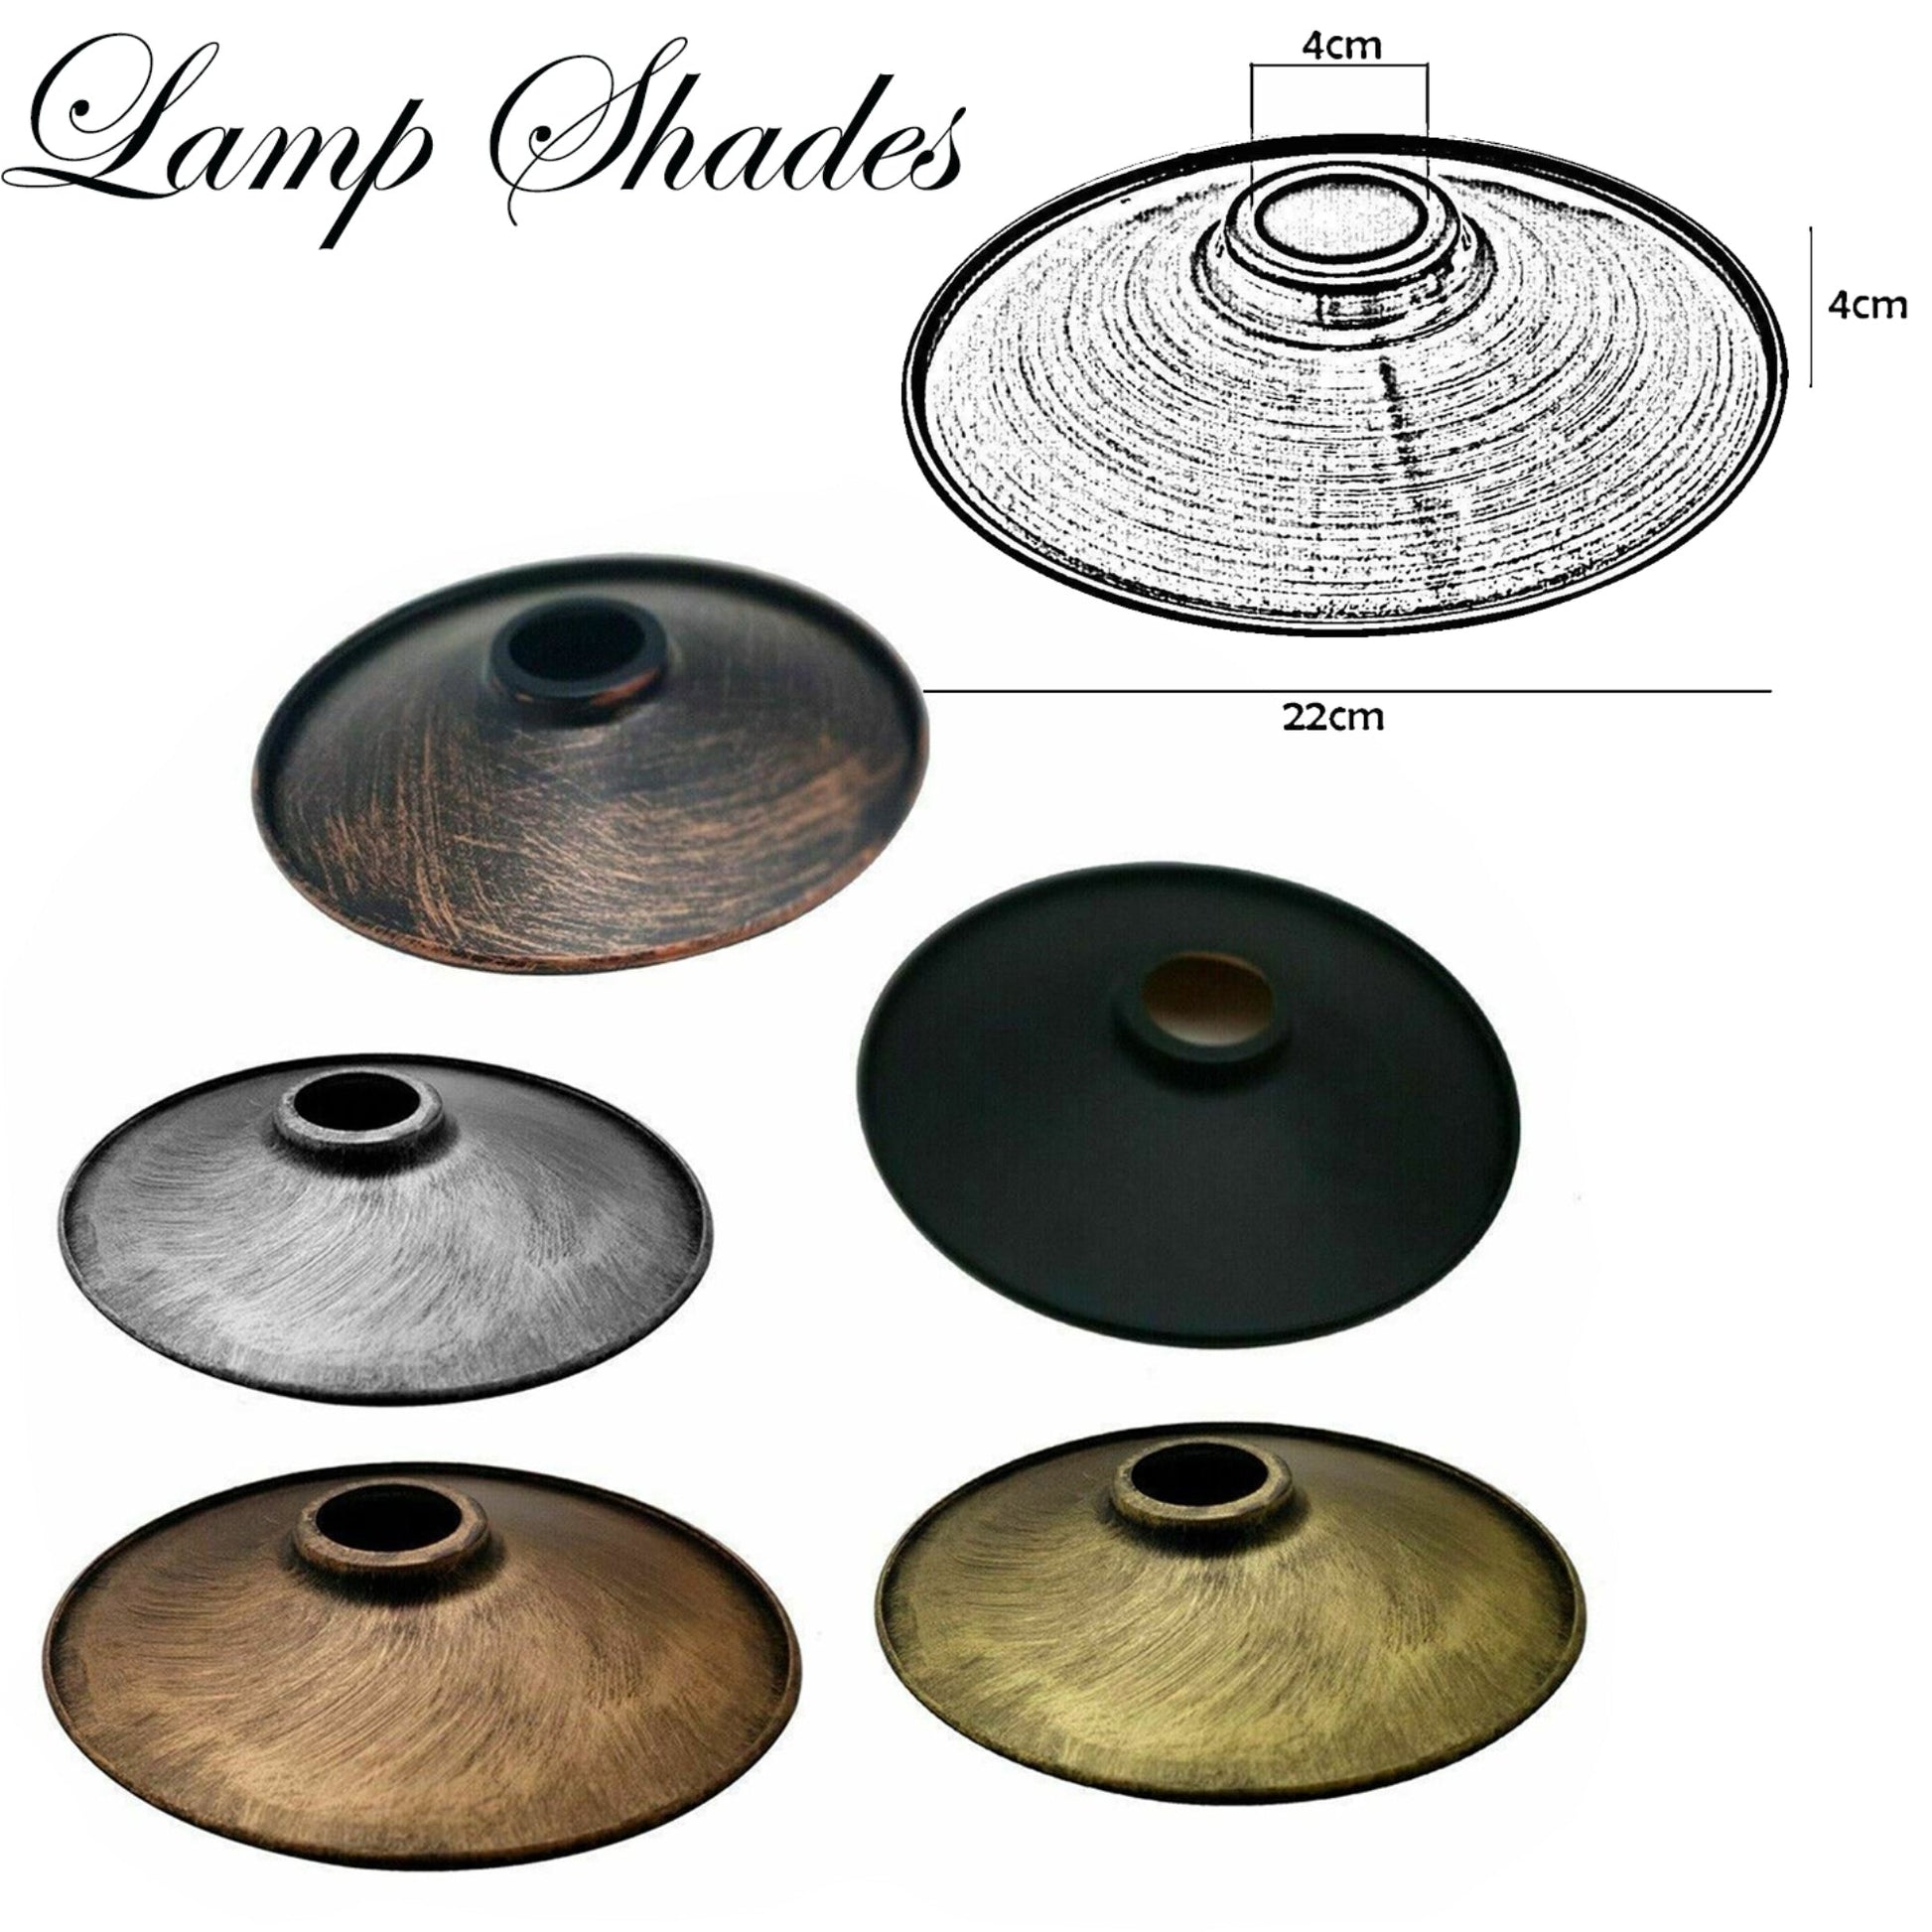 lamp shade - brushed copper - size image